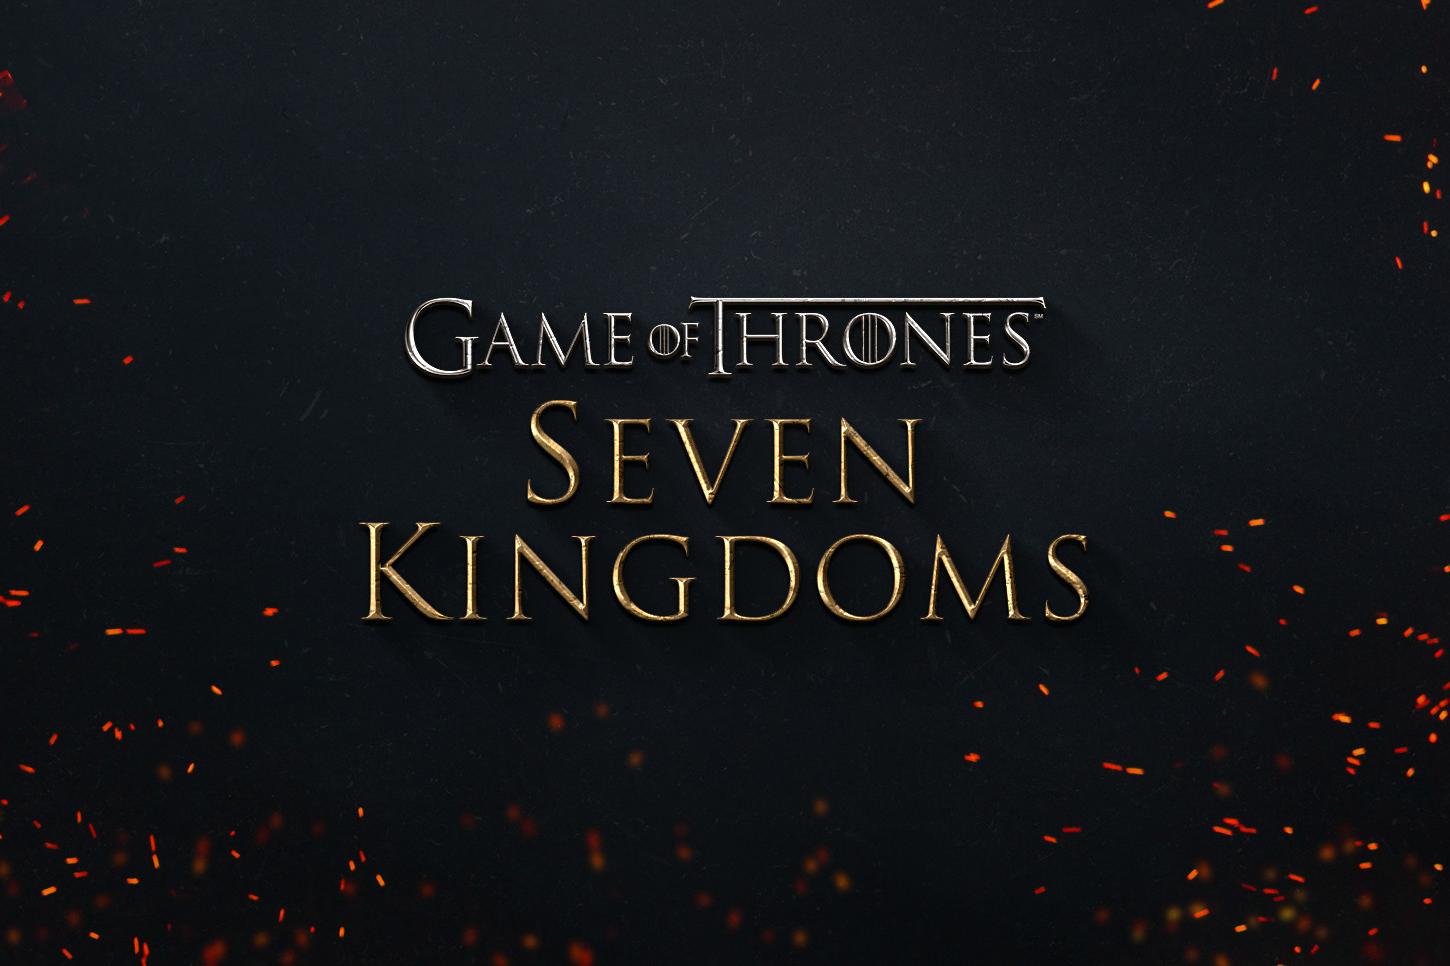 Carlos Lidón portfolio / UI for the PC Game: Game of Thrones Seven Kingdoms